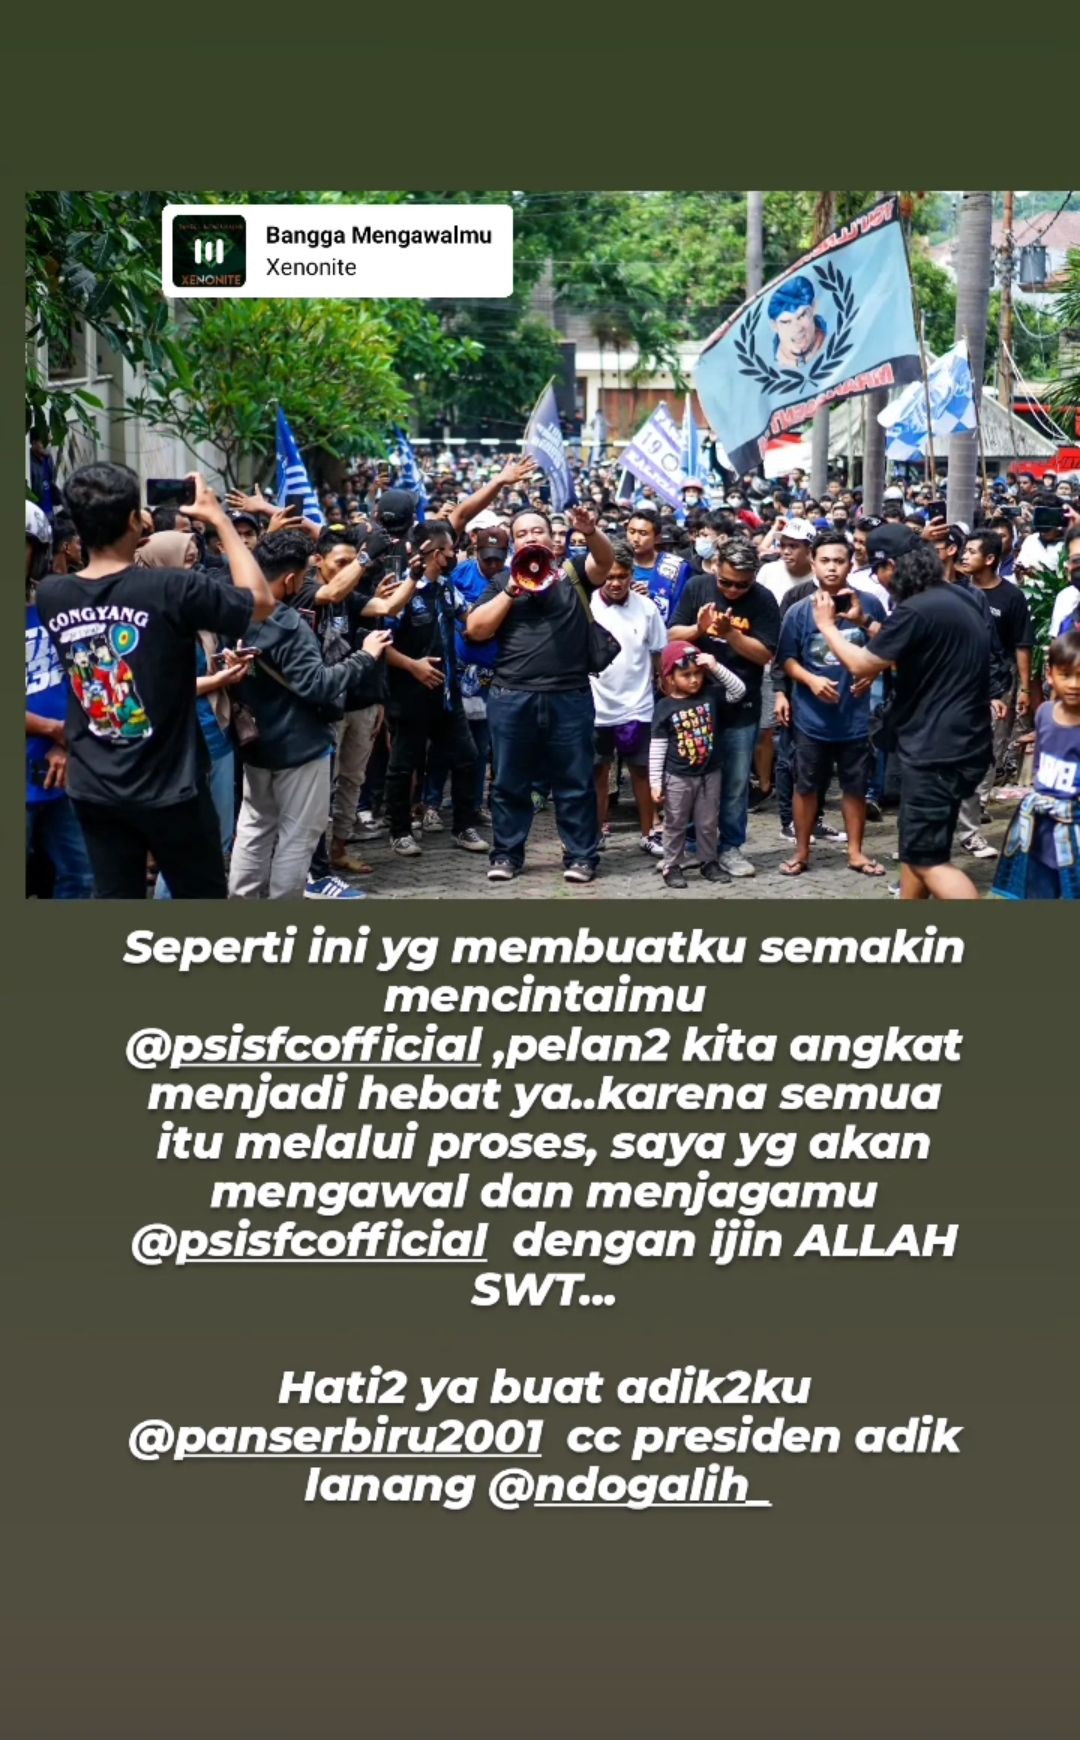 Komisaris PSIS Semarang Berikan Apresiasi Kepada Panser Biru: Ini Yang Membuat Saya Semakin Mencintai PSIS